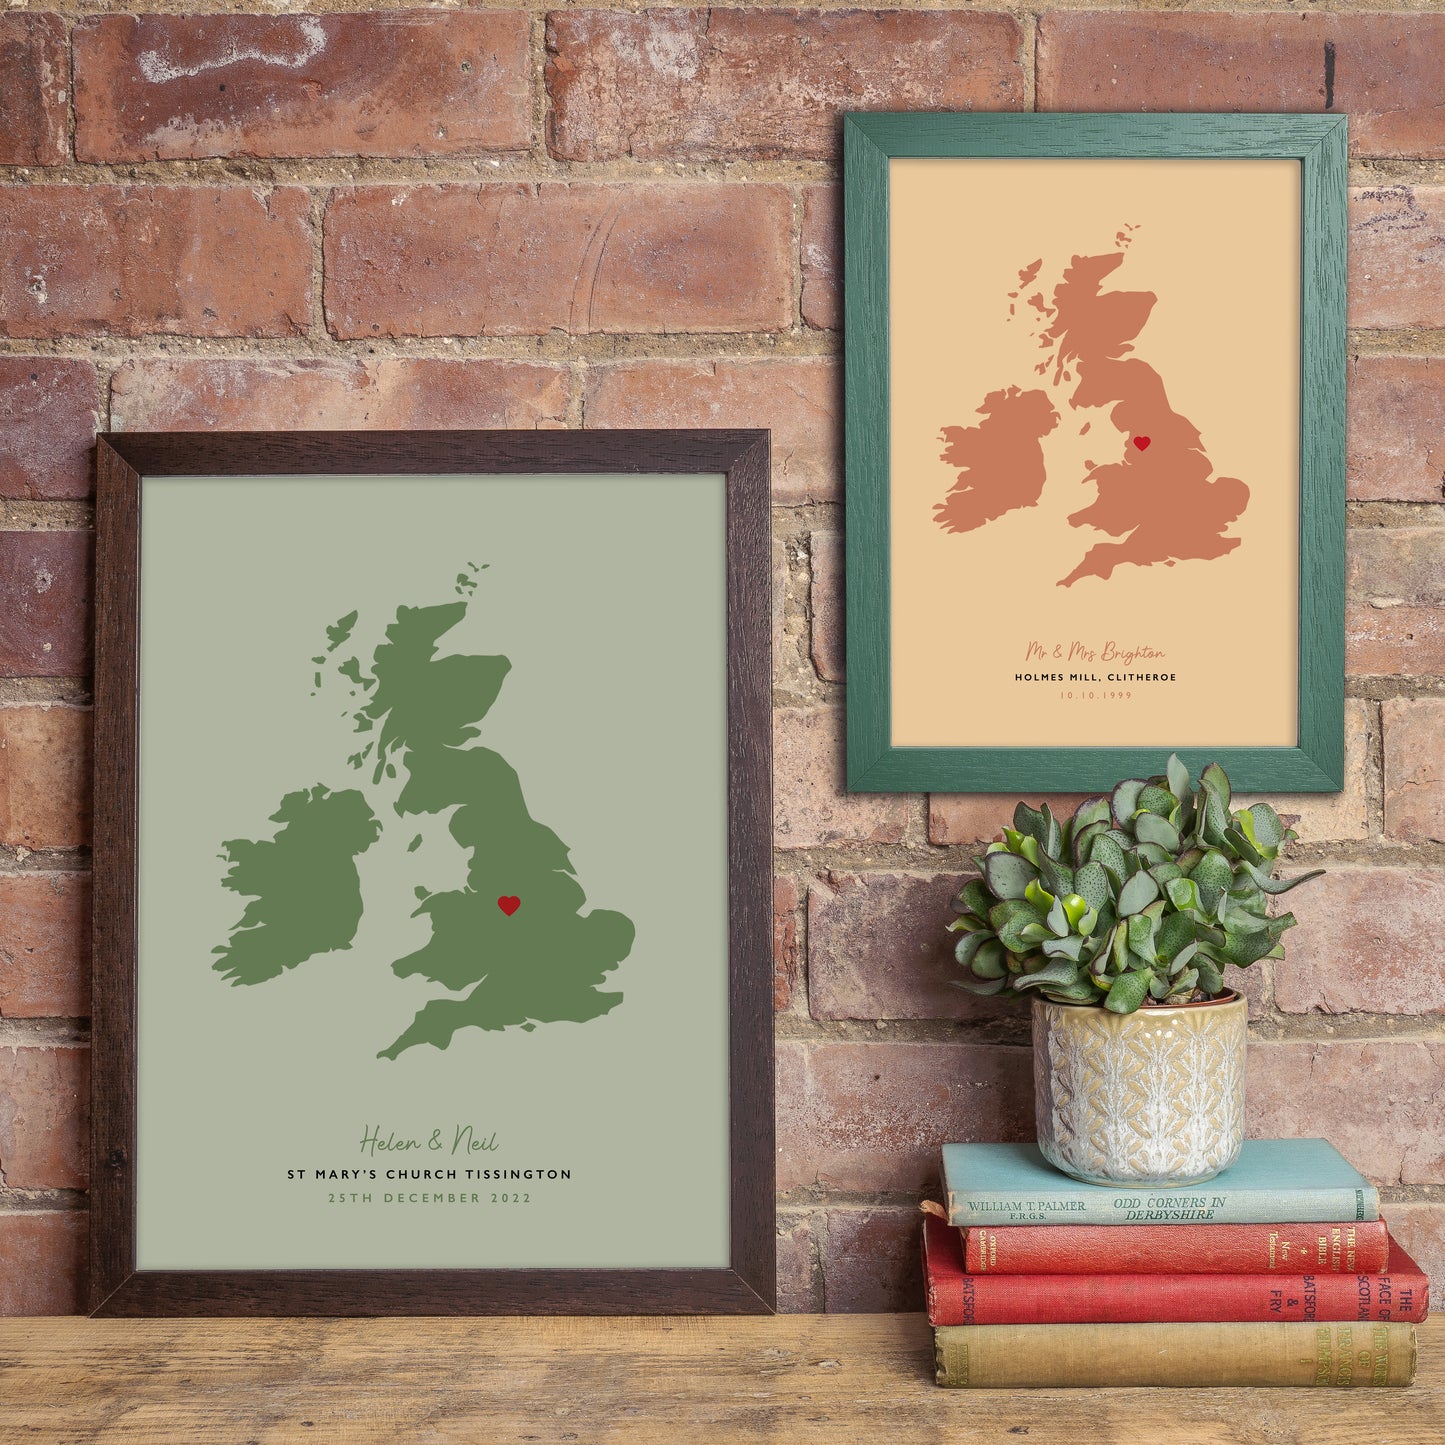 UK Map Print - Personalised Location Heart Print - Wedding Gift - Anniversary Gift